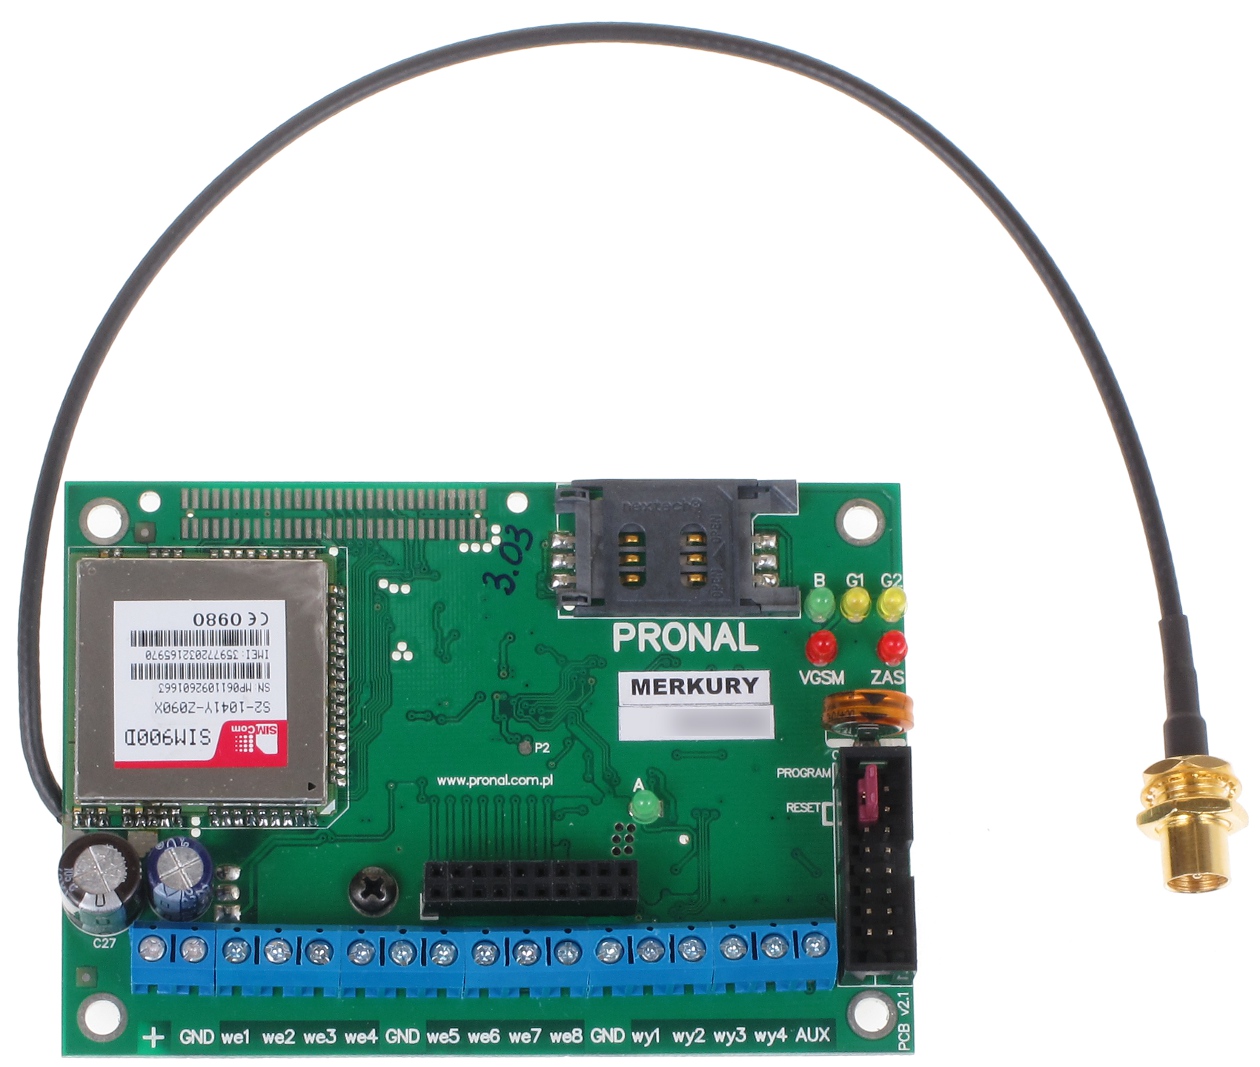 GSM COMMUNICATION MODULE LT-MERKURY PRONAL - Communication Modules - Delta